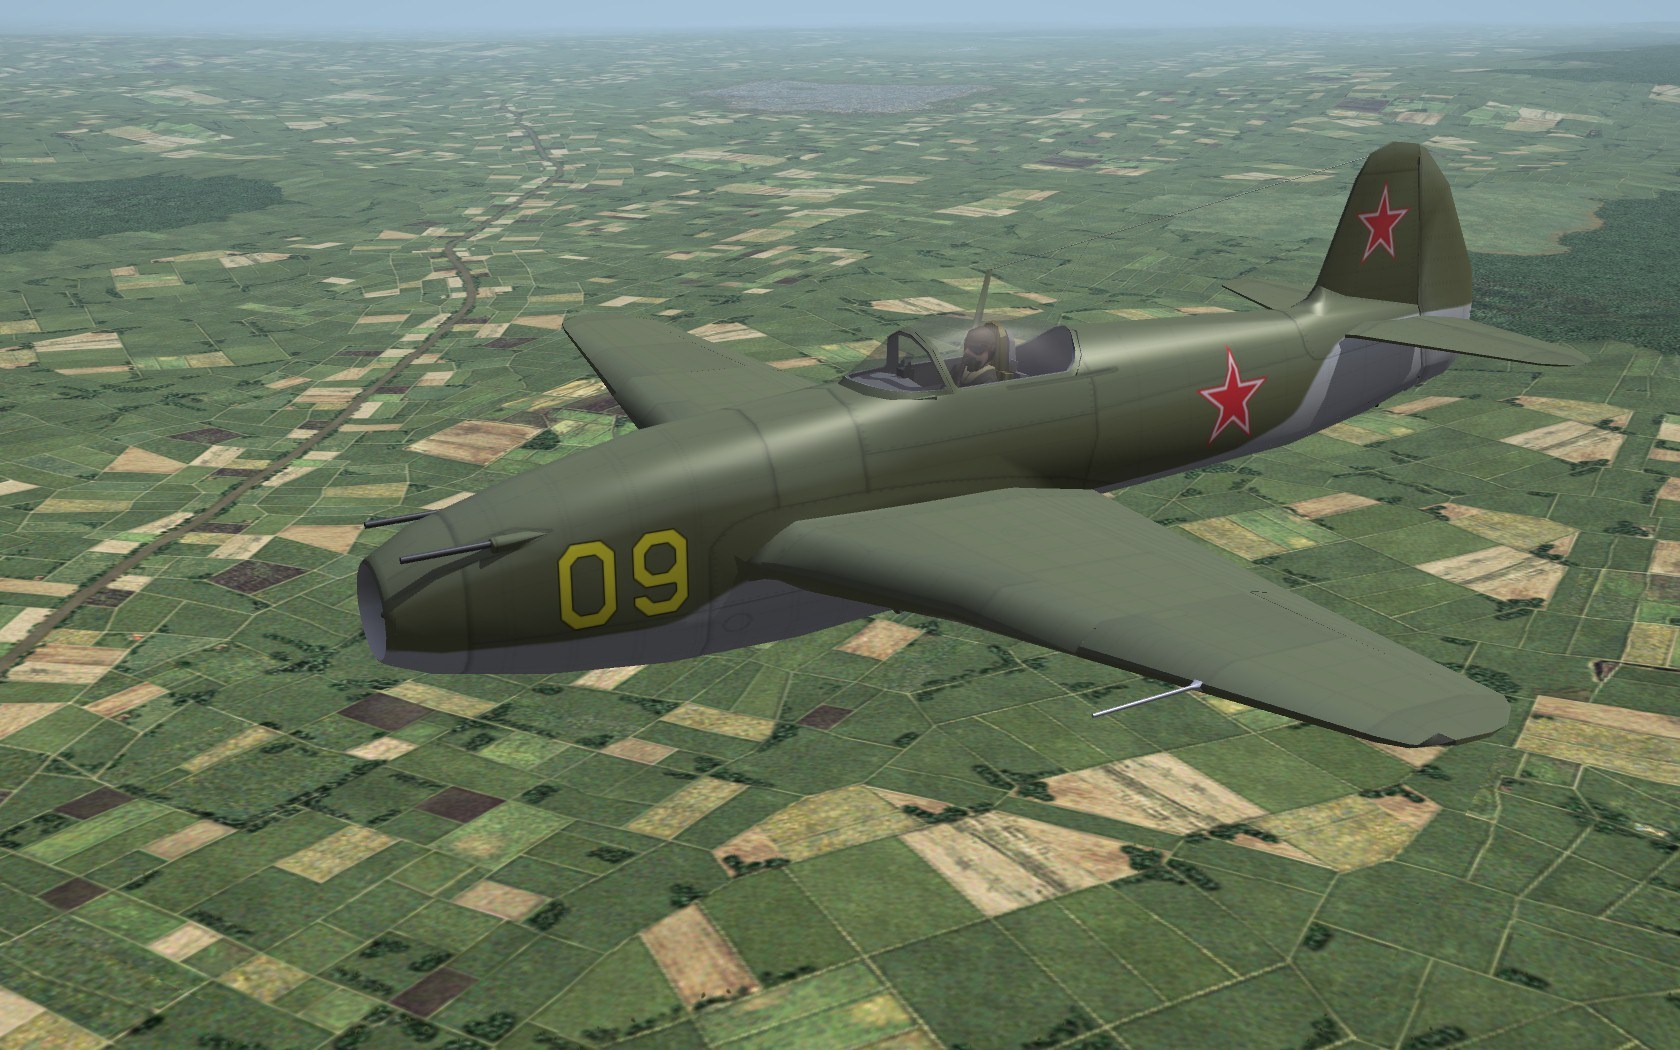 Yak-15 "Feather"